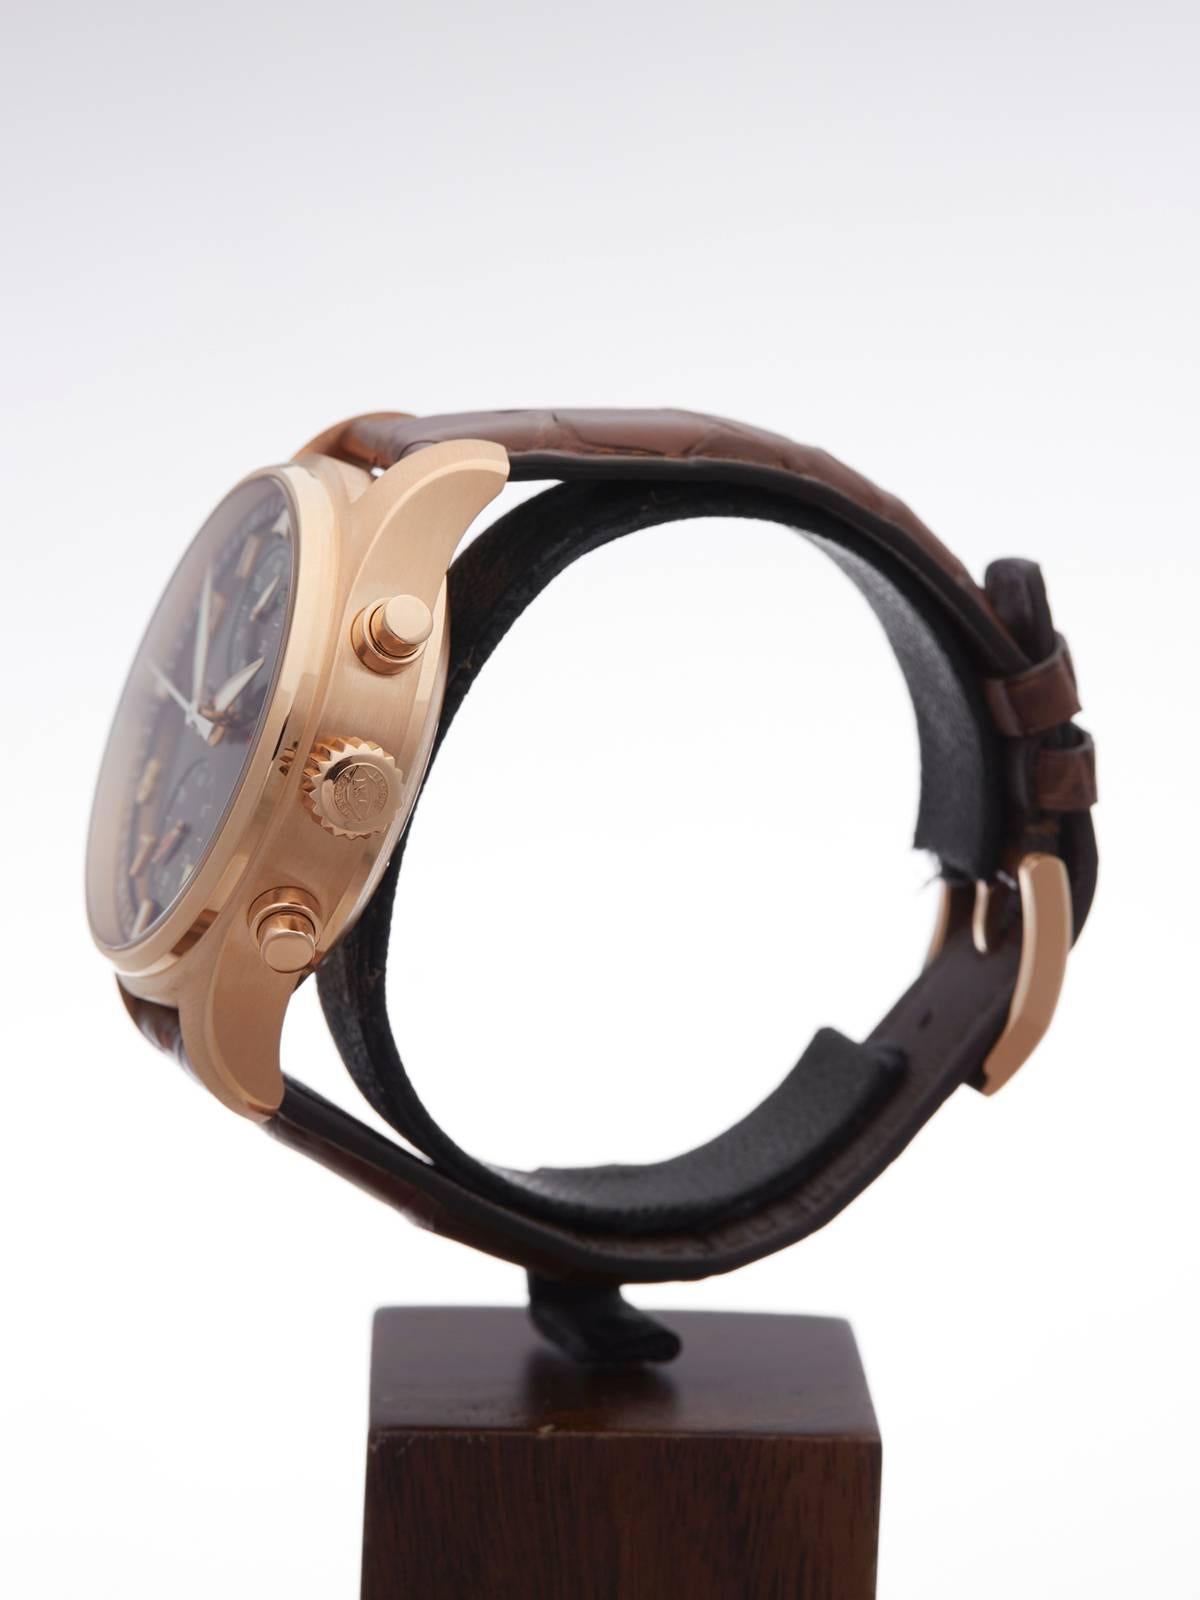 IWC Rose Gold Pilot's Chronograph Spitfire Automatic Wristwatch 2